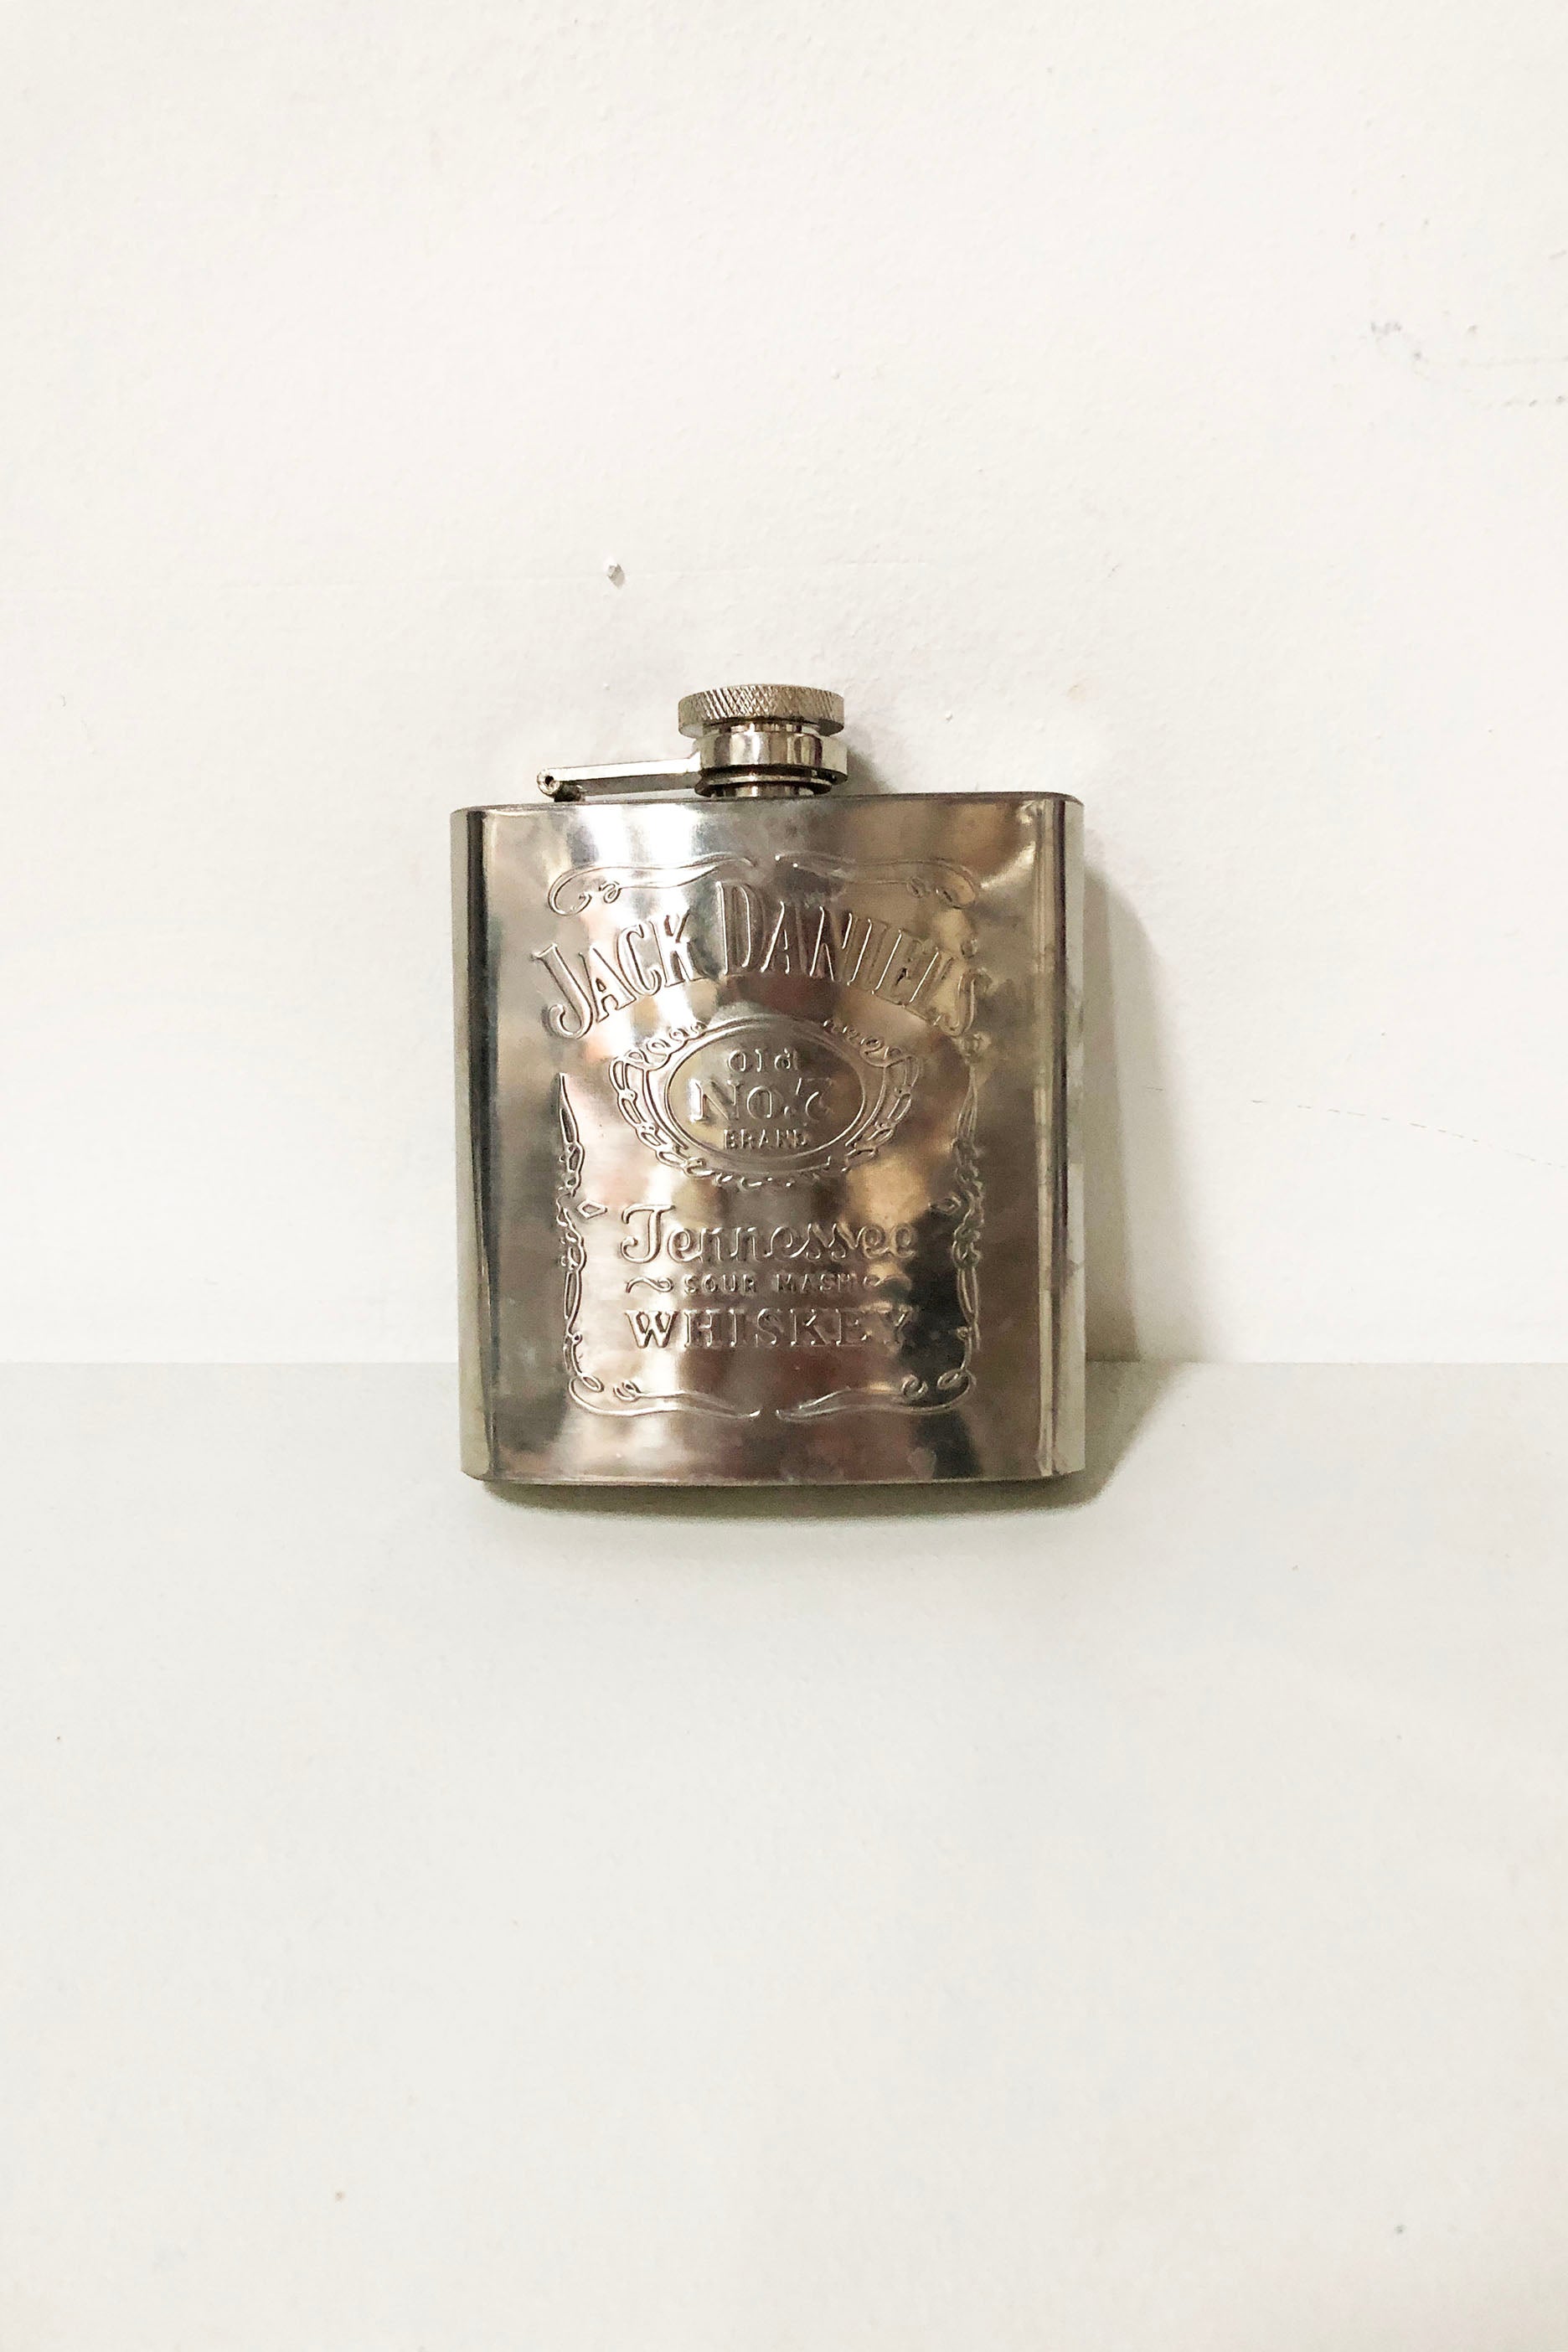 Jack Daniel's Silver Hip Flask